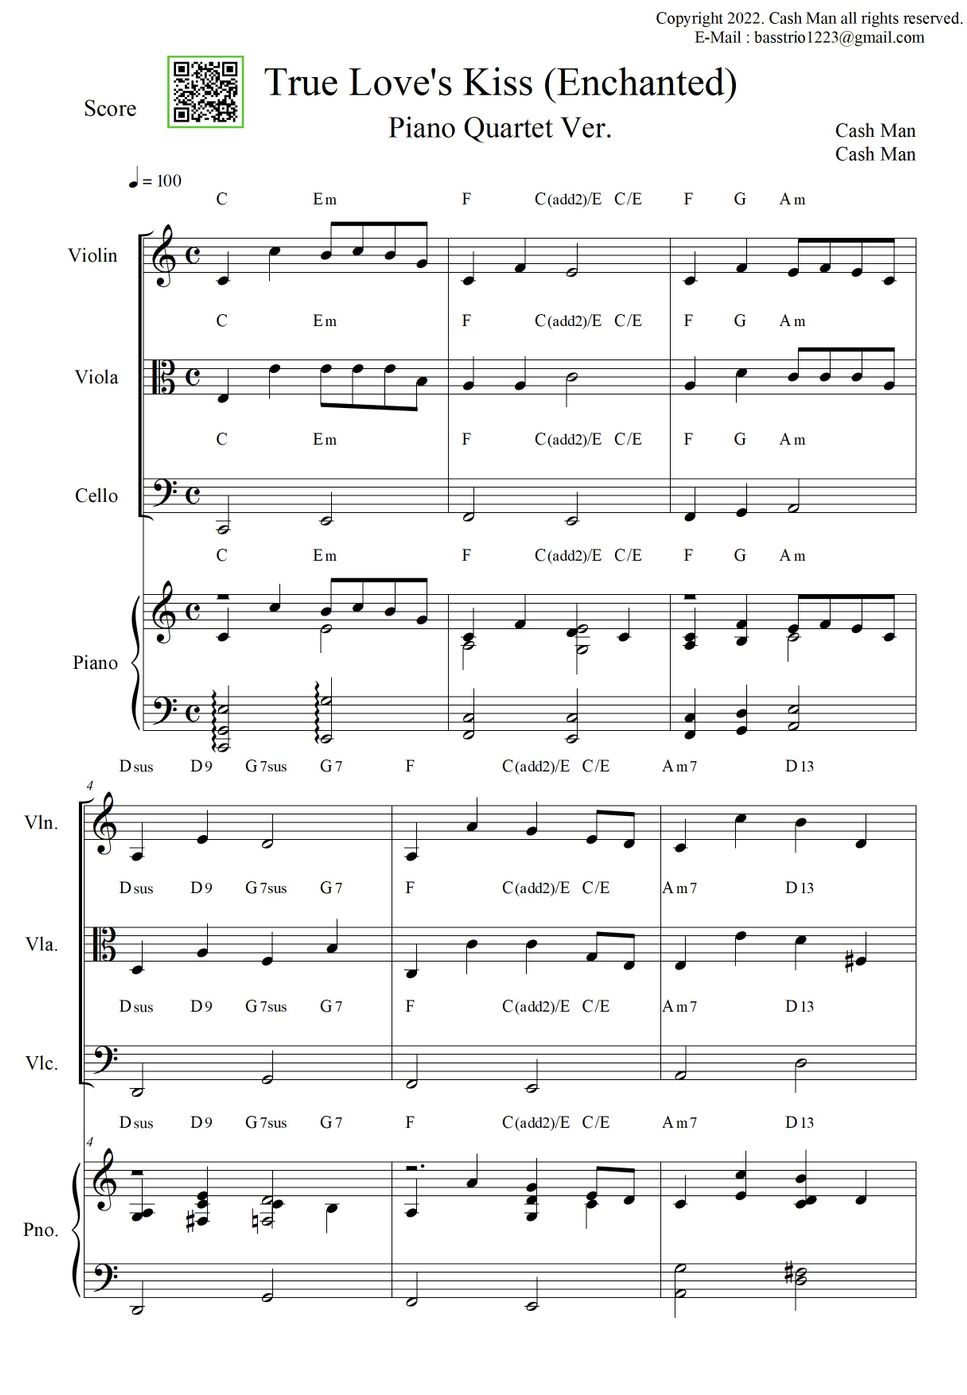 Enchanted - True Love's Kiss (Piano Quartet / Full Score / Part Score / Chord / Arrangment) by Cash Man